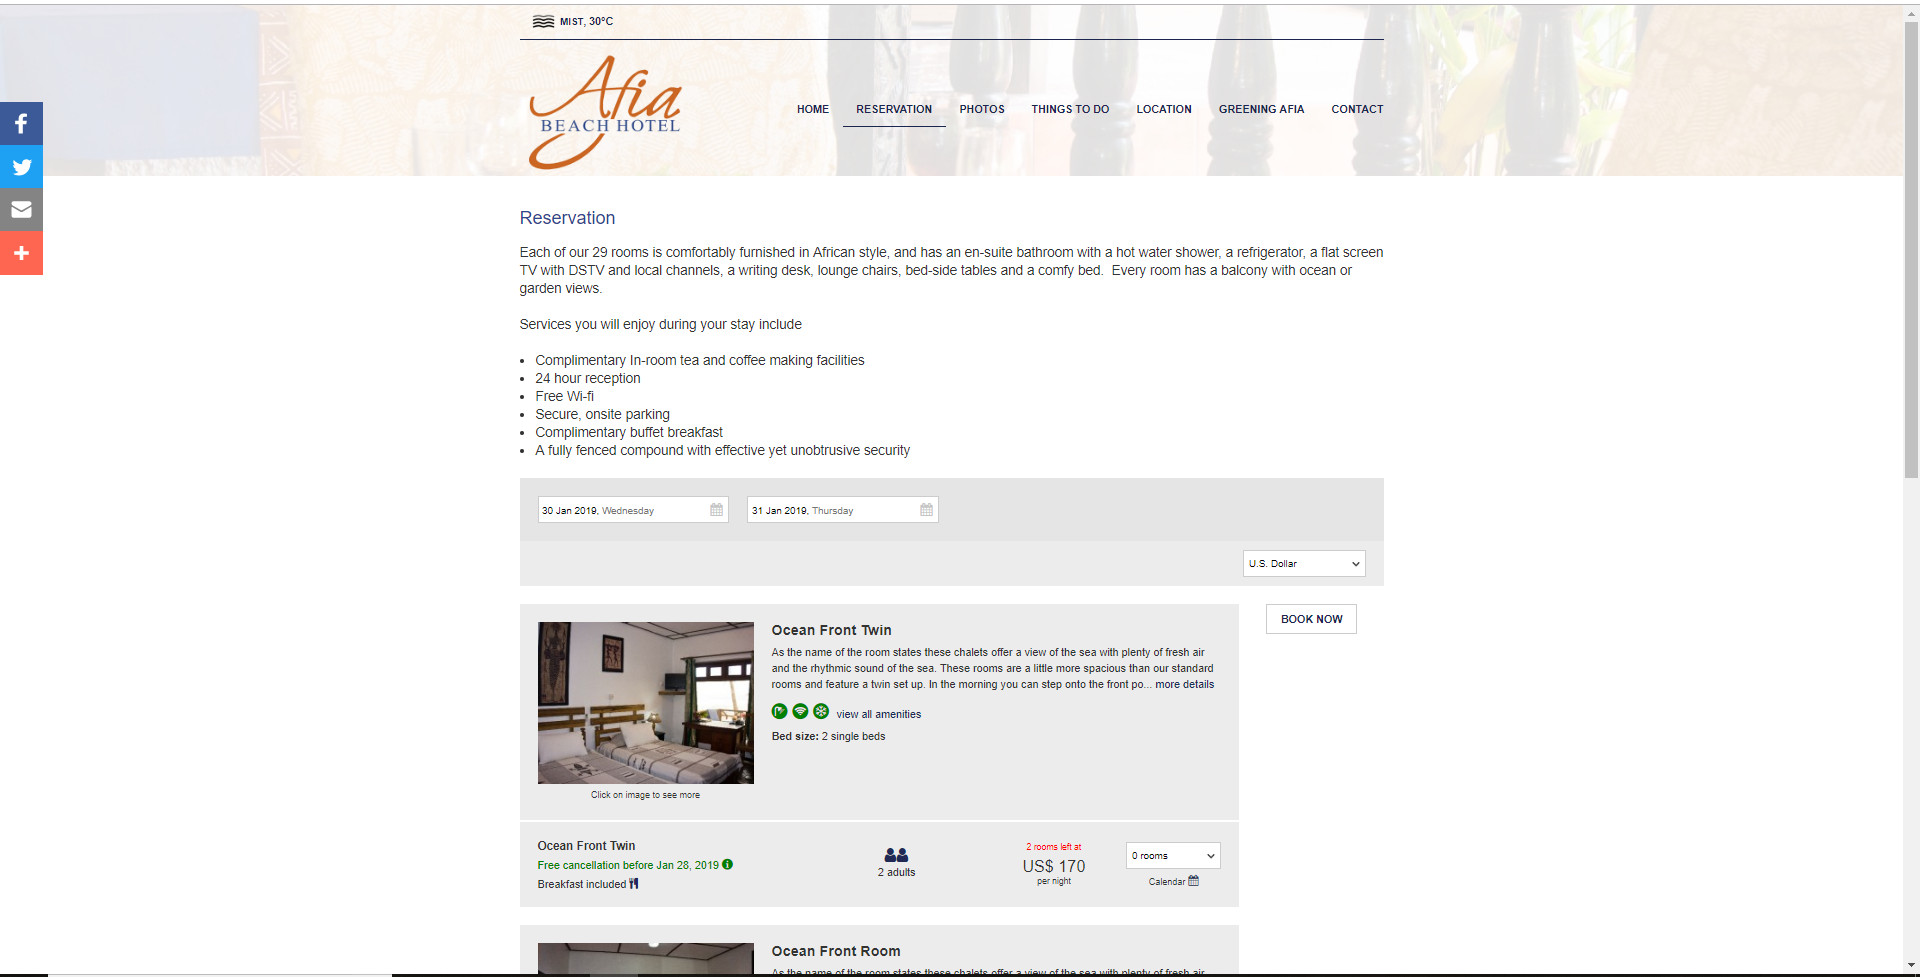 Afia Beach Hotel | Booking Page | Hotels | Web design | Websites | booking engine | digital marketing | Ghana | Togo | Benin